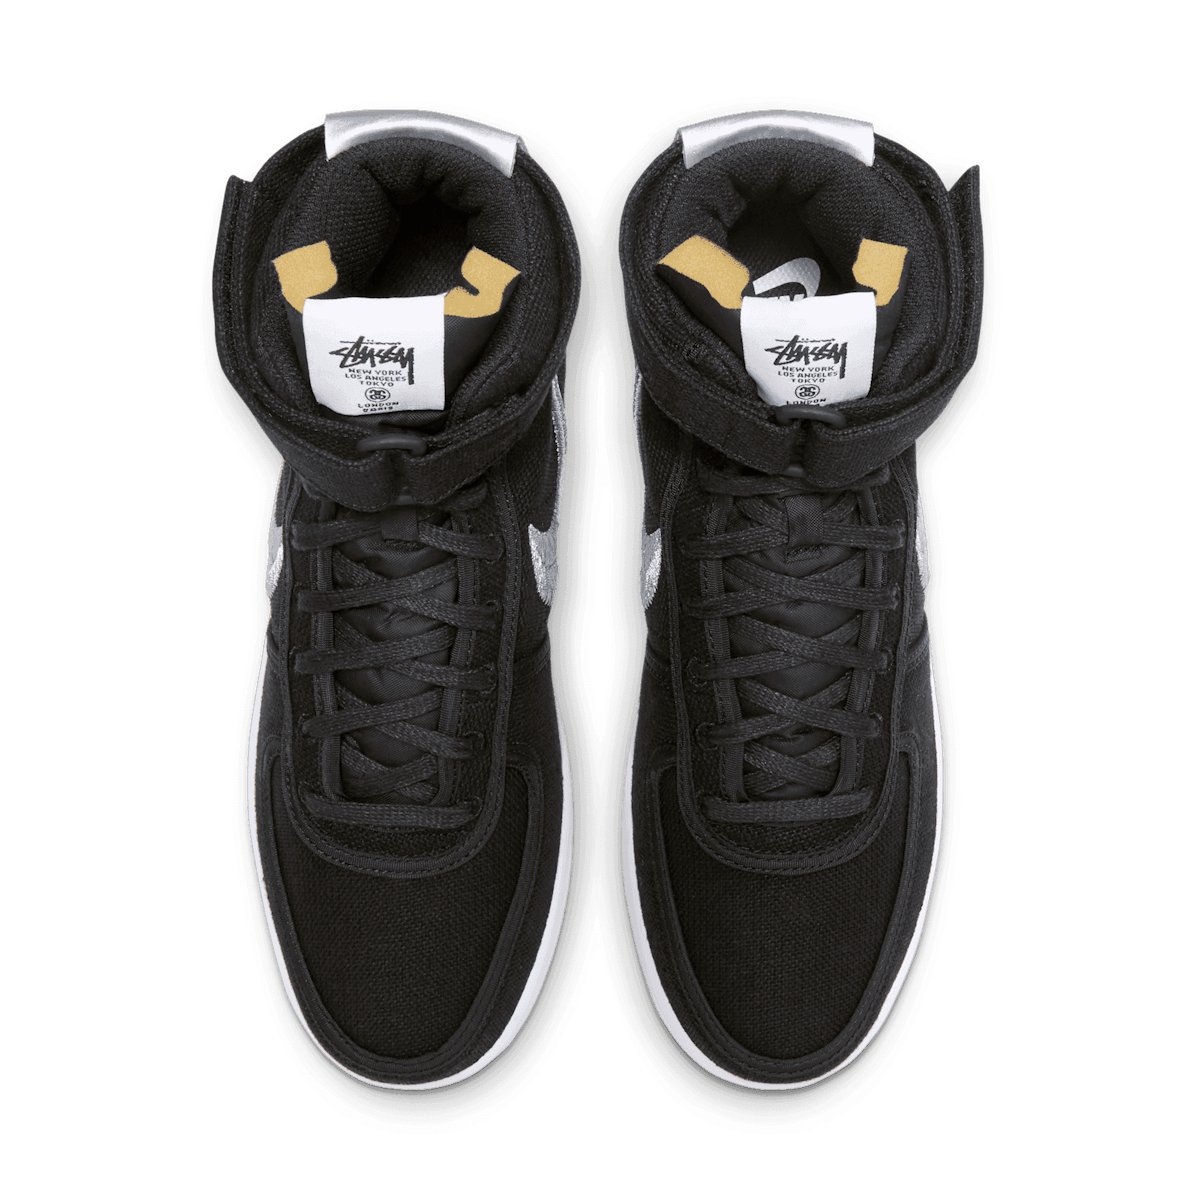 Nike Vandal High Stussy Black - DX5425-001 Raffles and Release Date